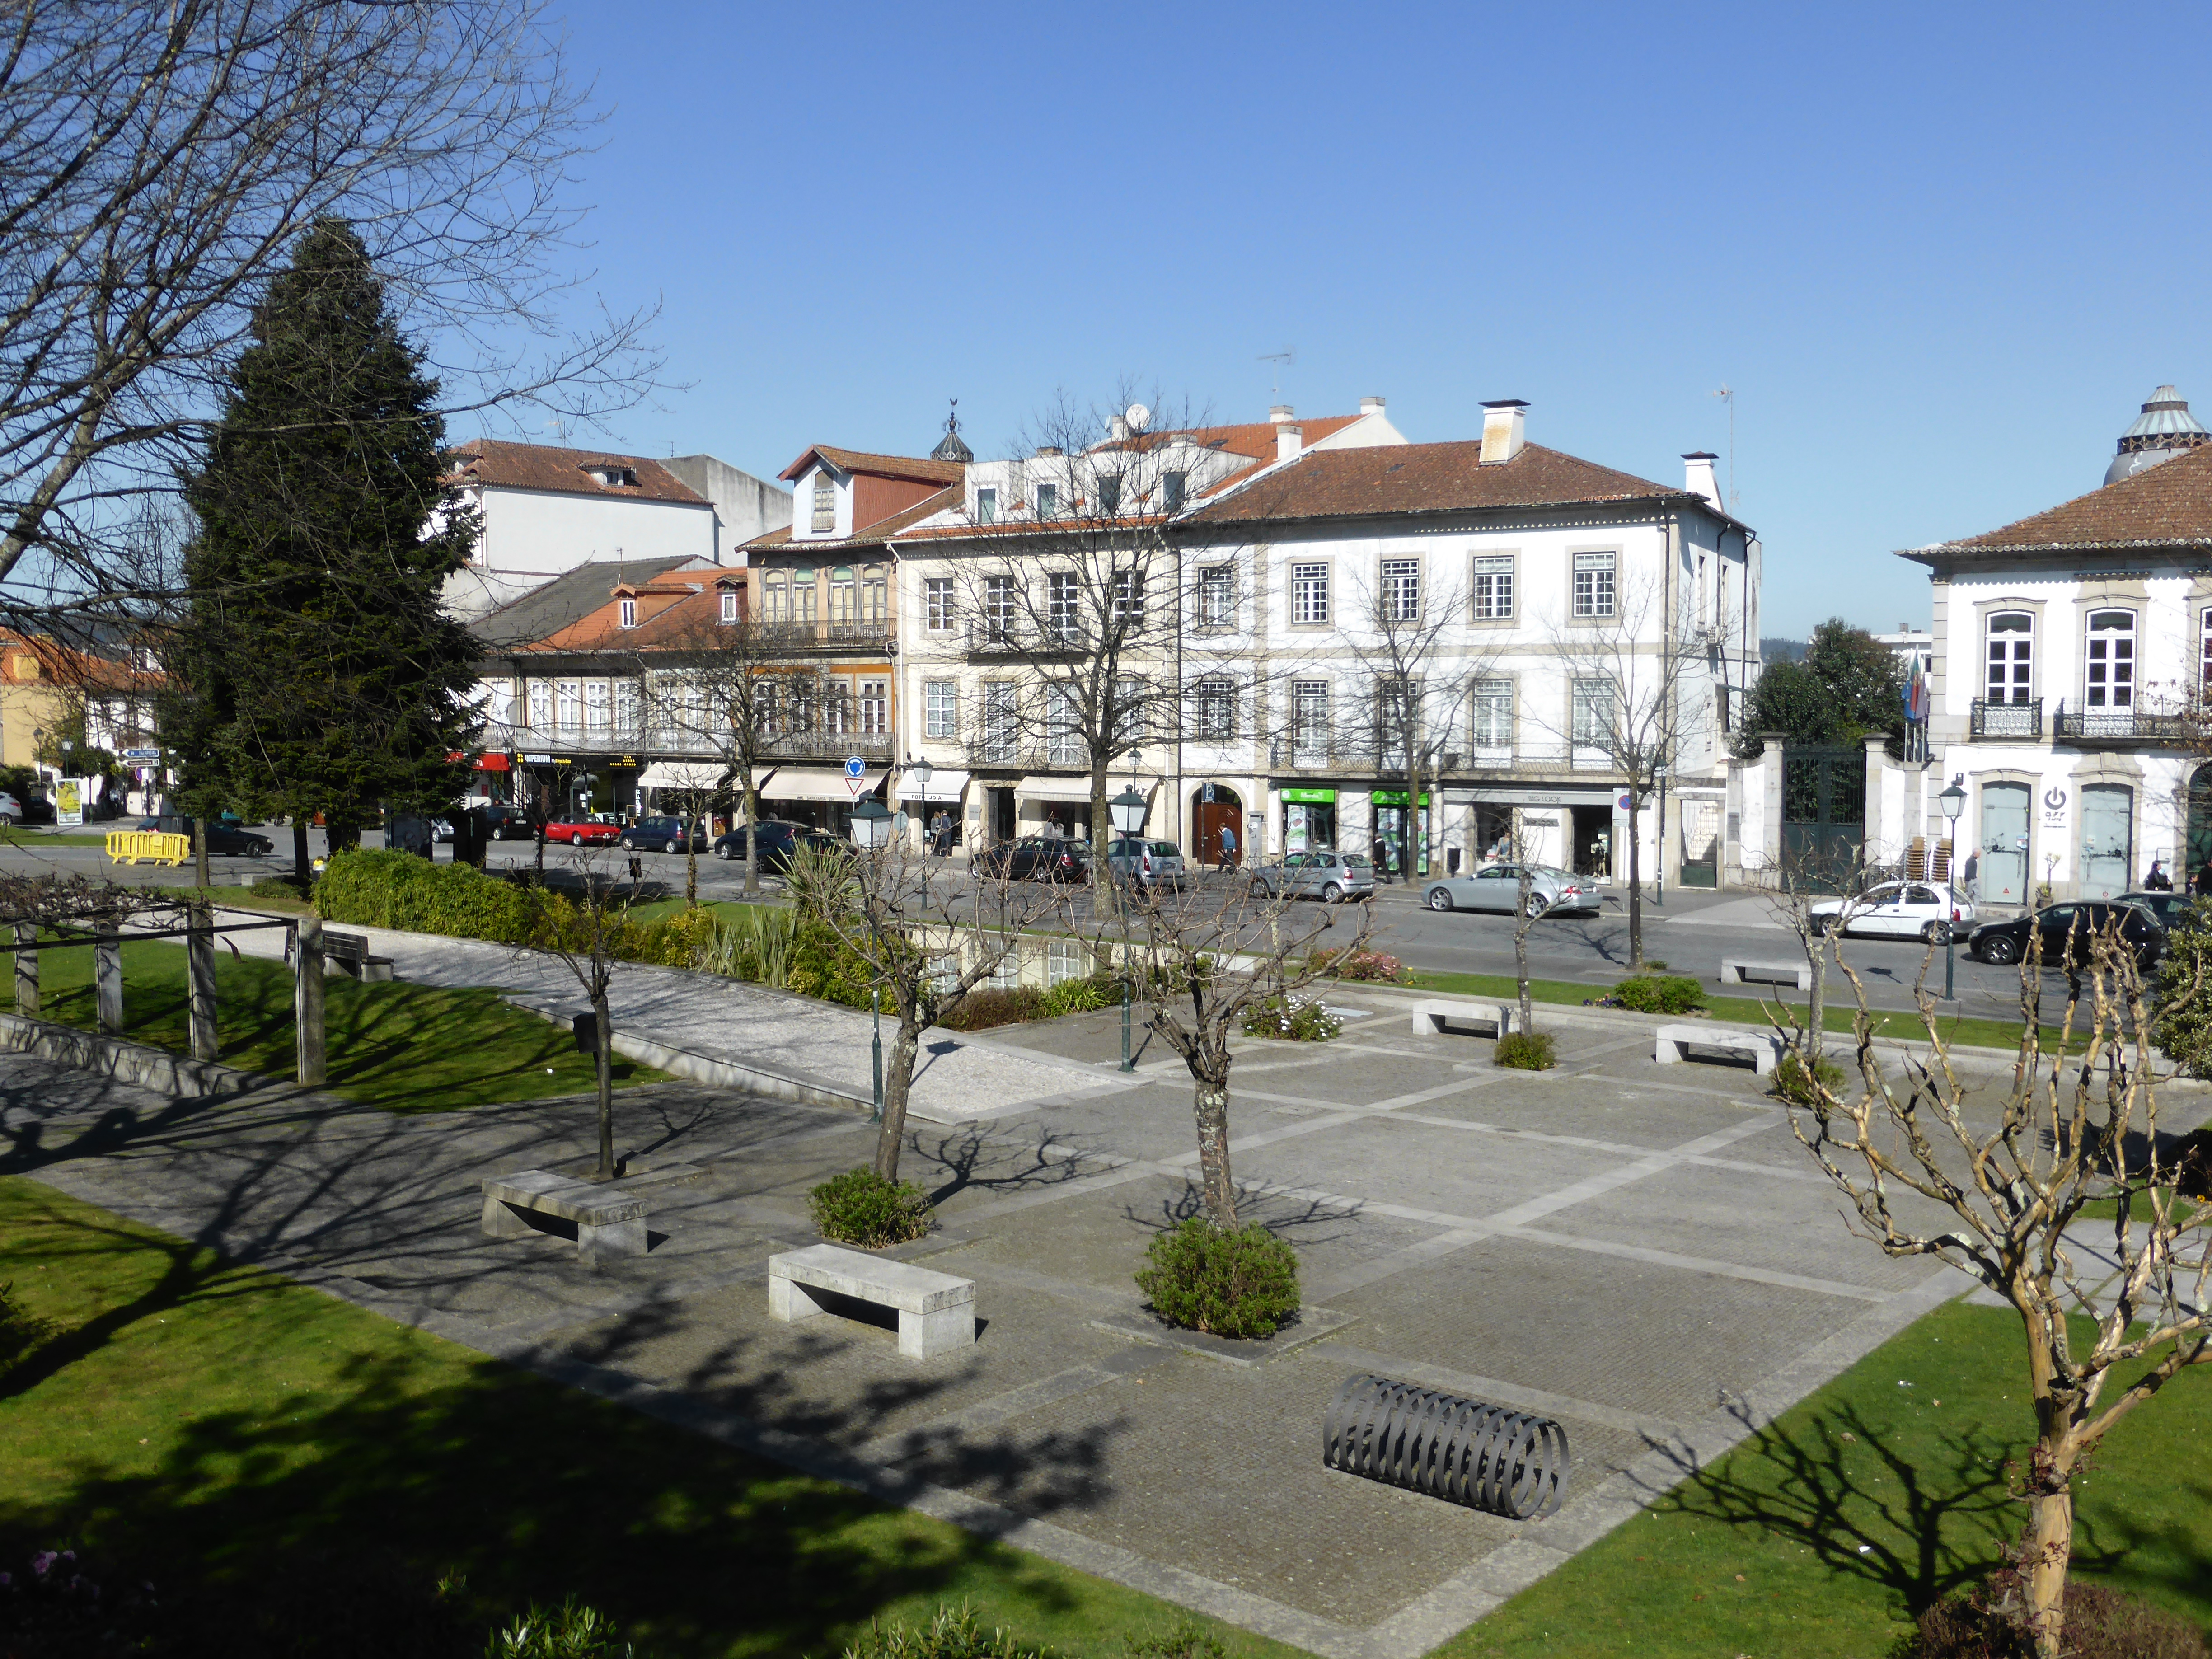 File:Fafe, Portugal (20827441978).jpg - Wikimedia Commons